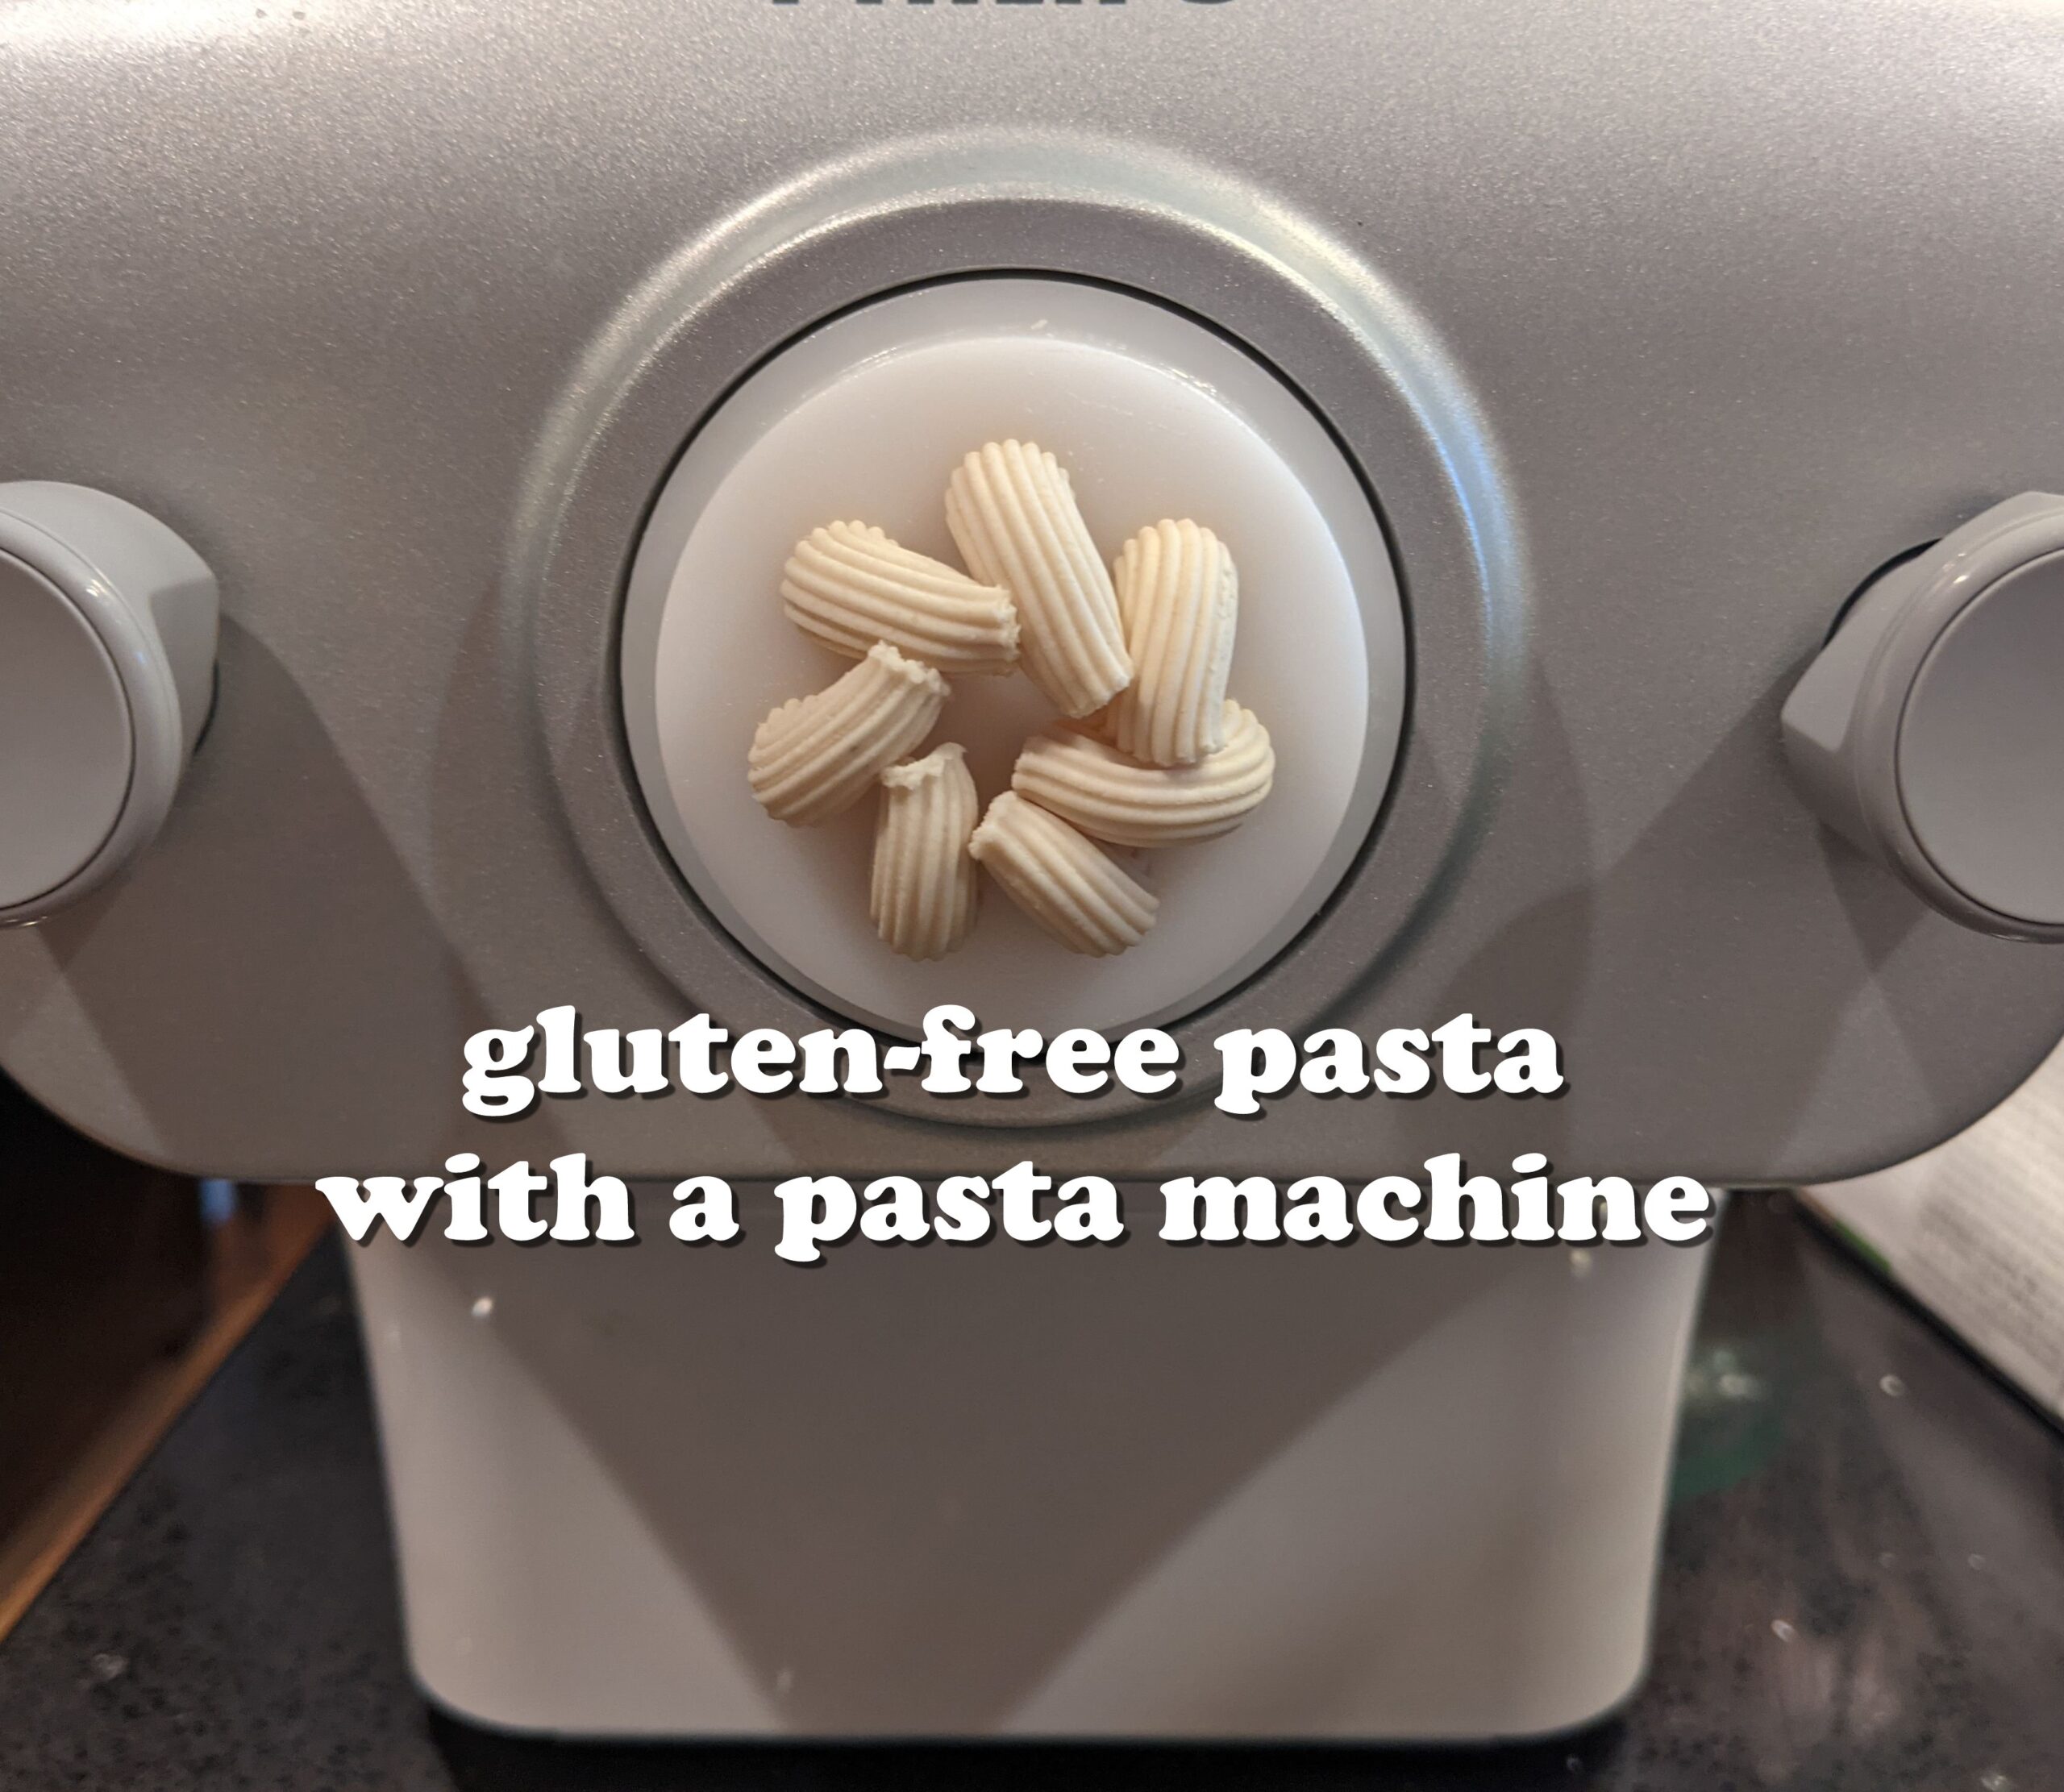 https://valeriesrecipes.com/wp-content/uploads/2021/04/gluten-free-pasta-machine-pasta-scaled.jpg